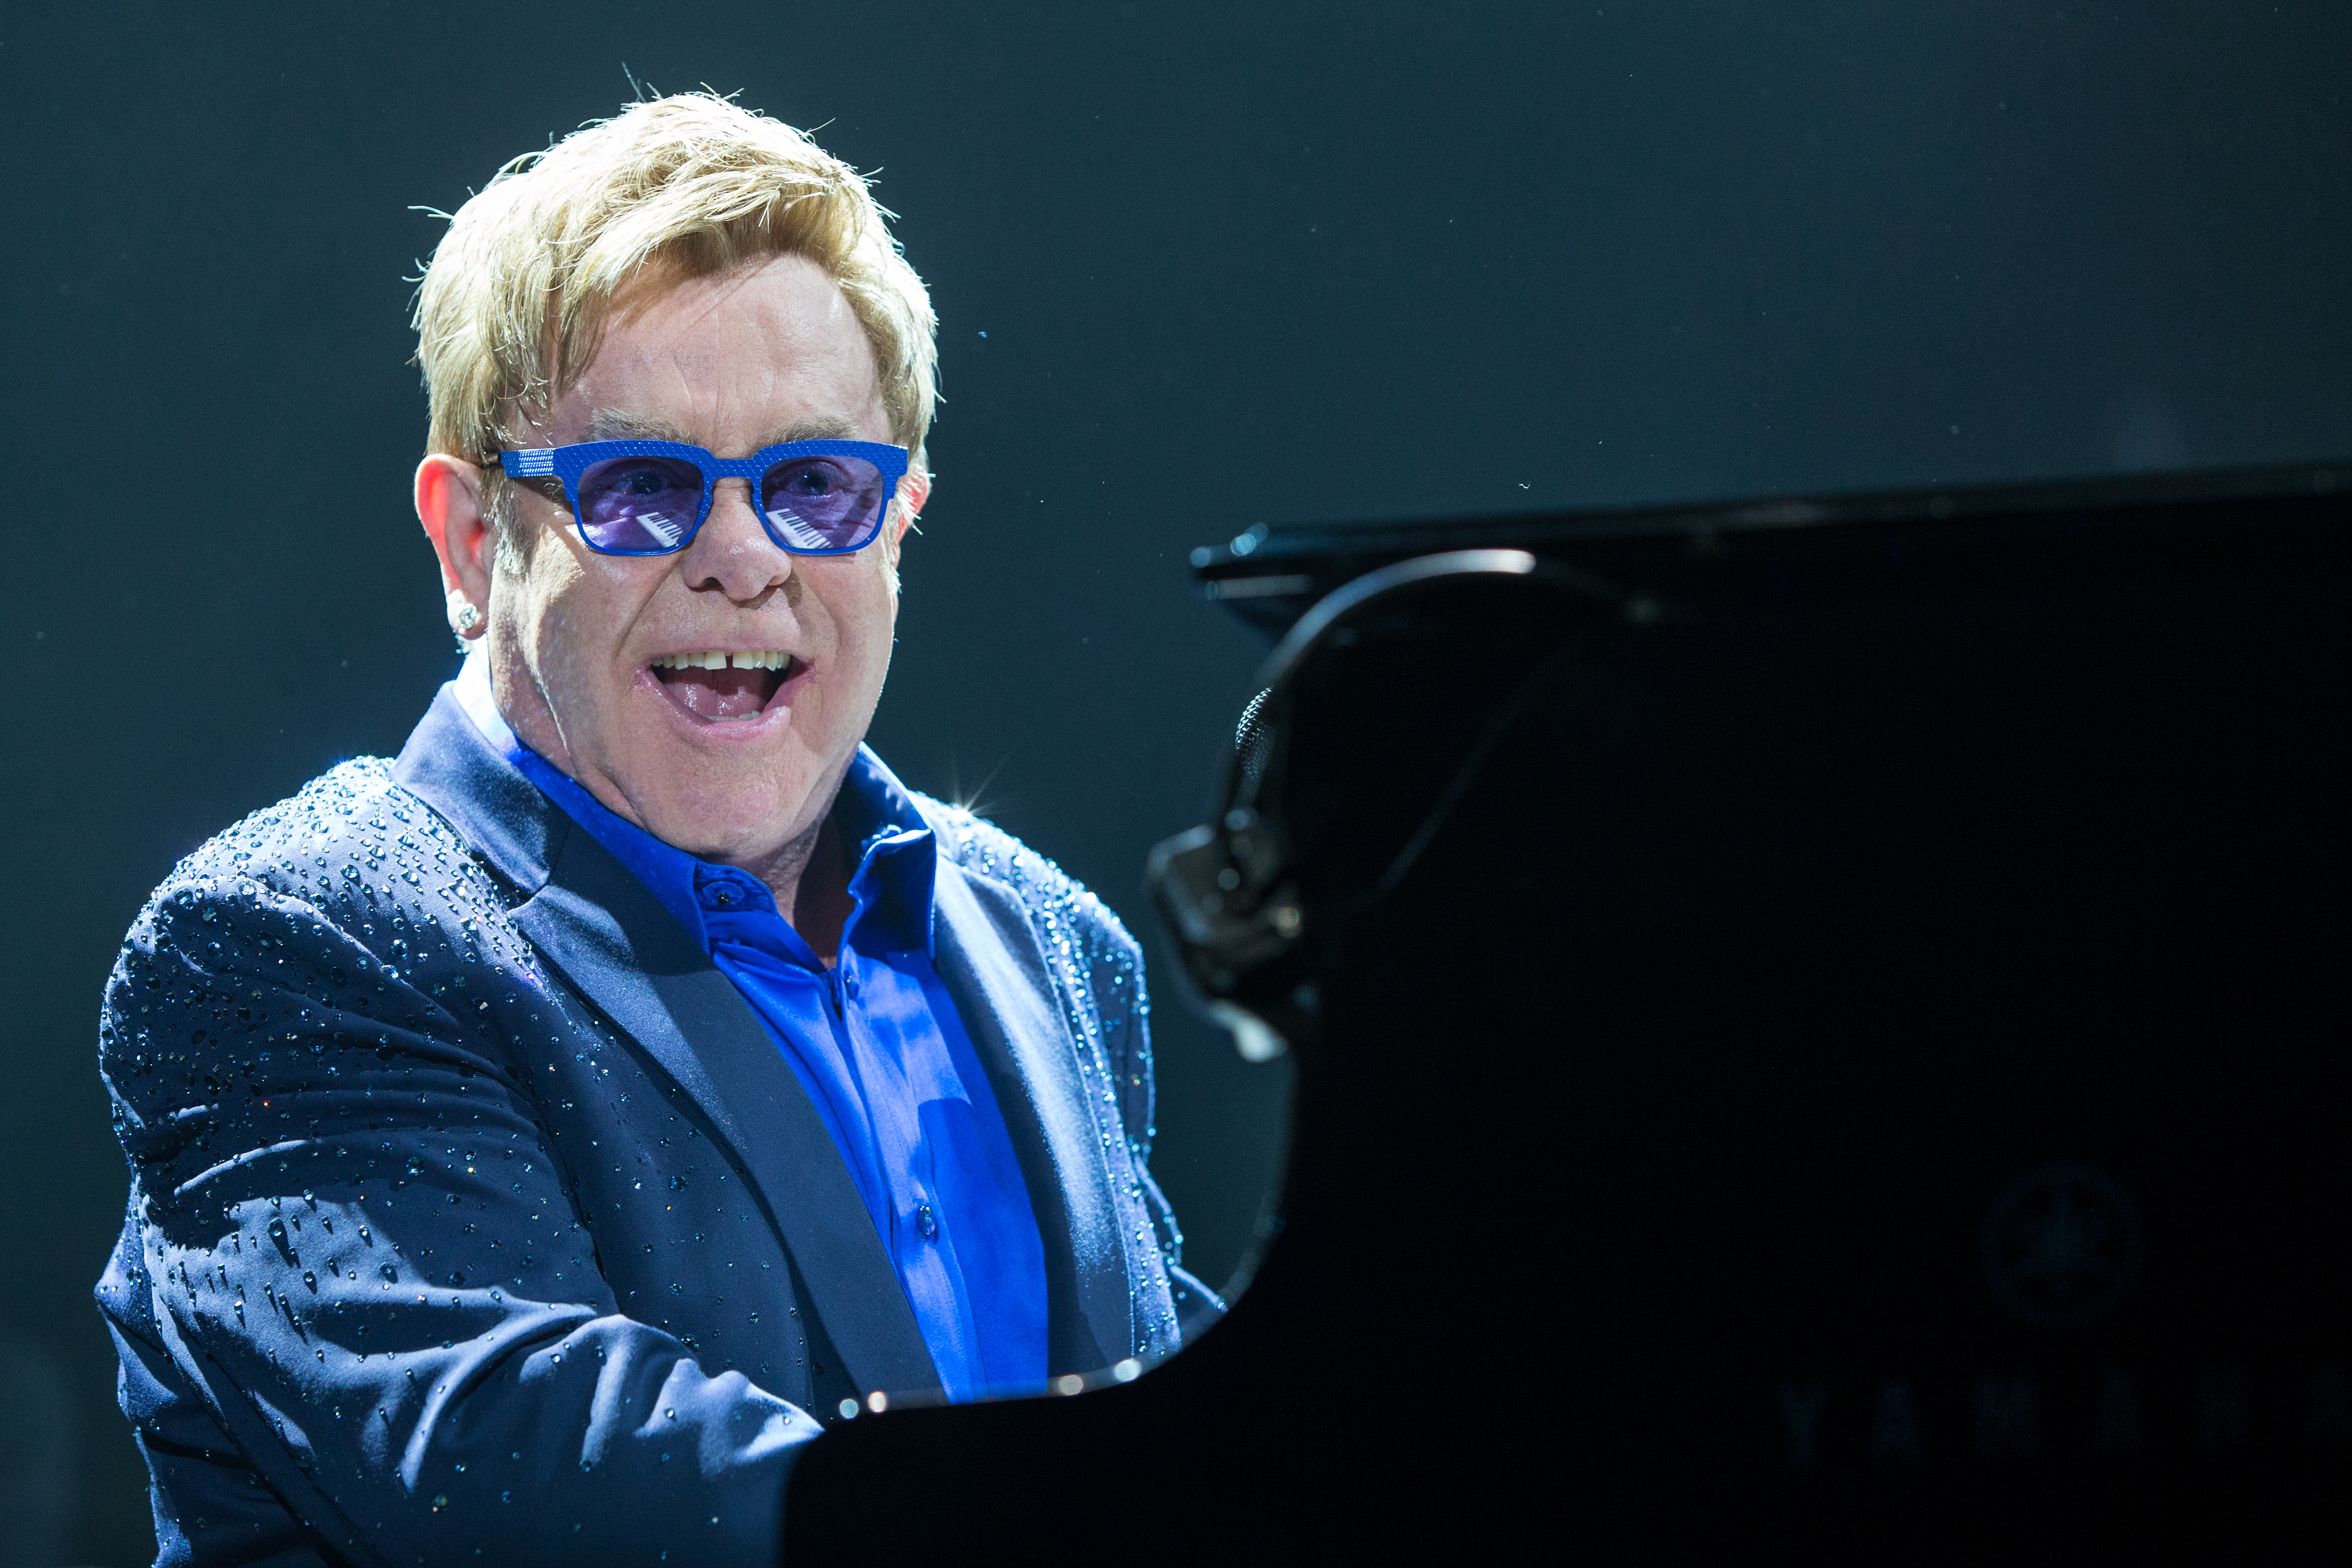 Elton John plays piano for London commuters - CBS News3000 x 2000